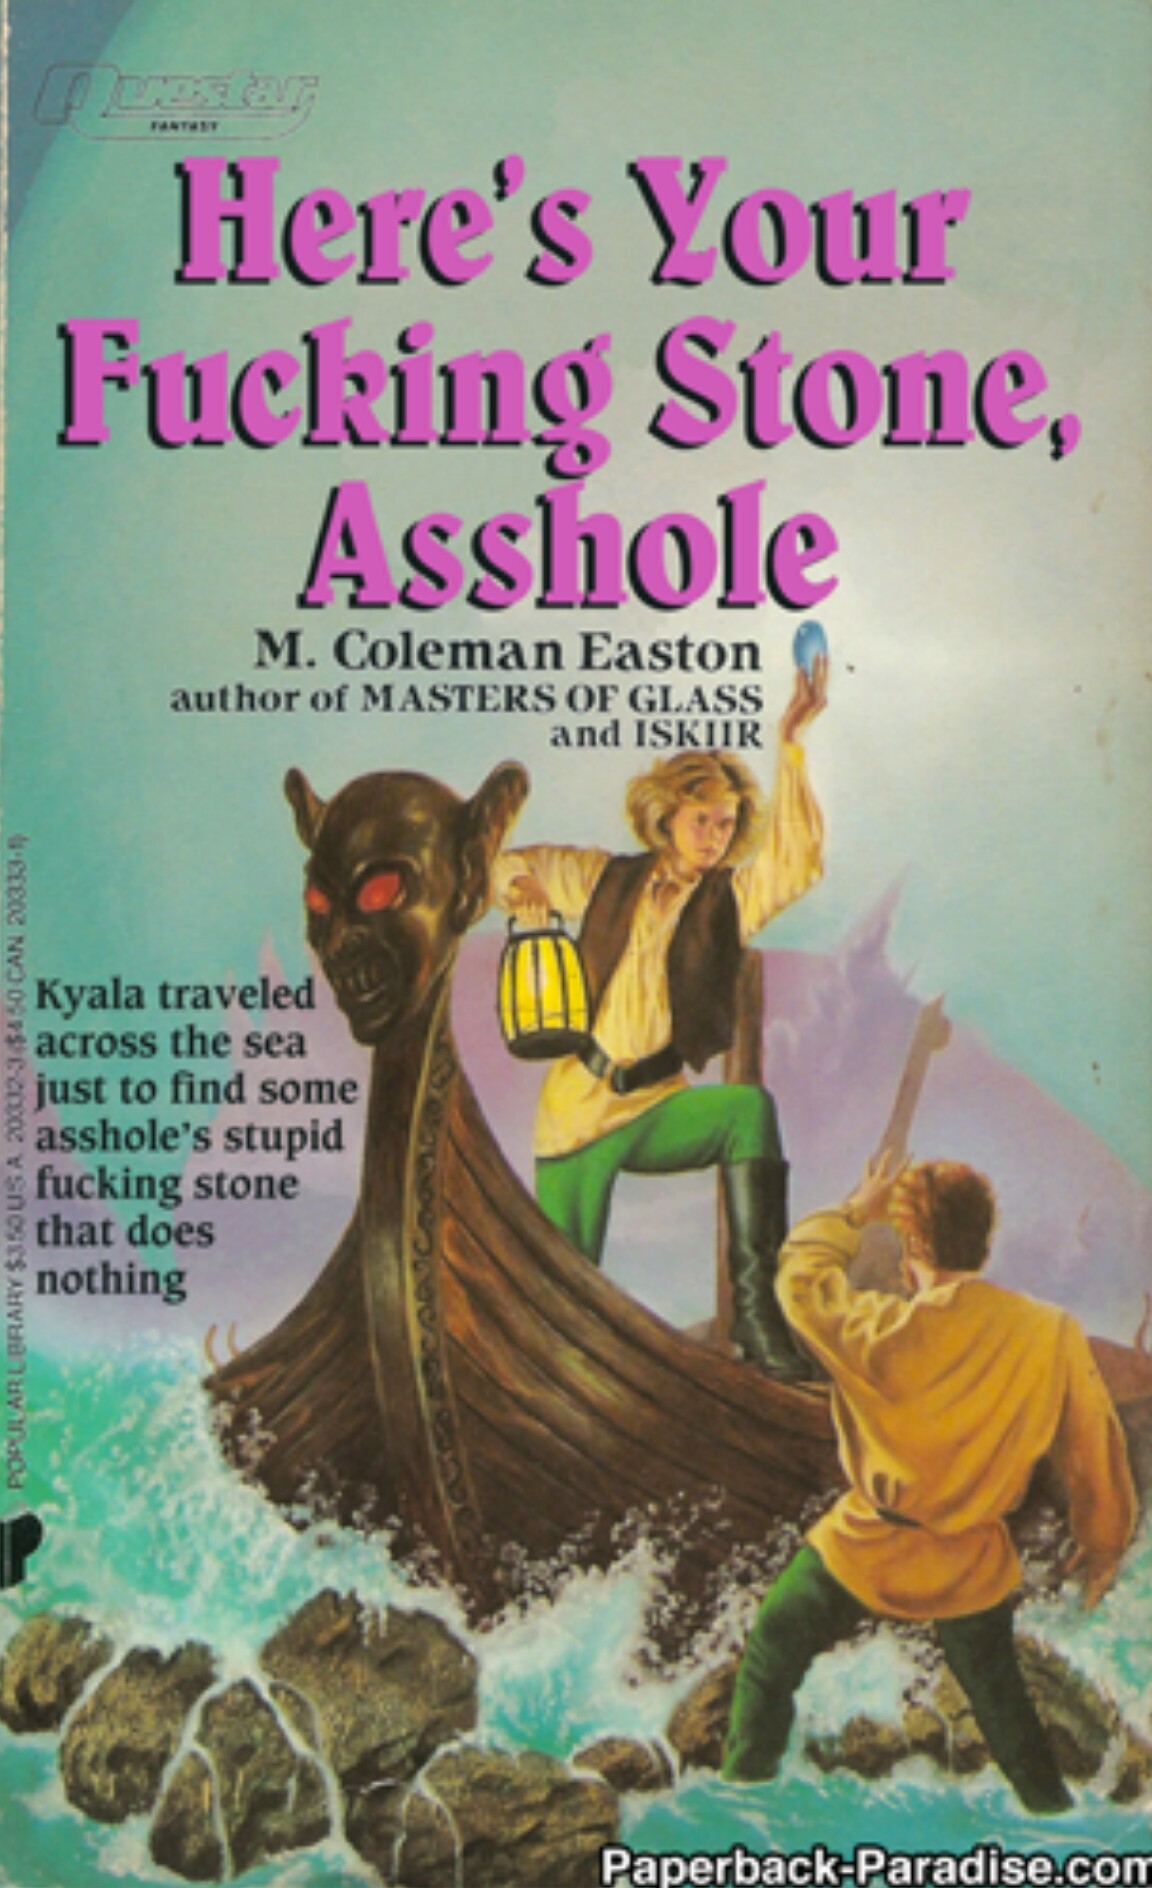 Fuckin assholes and their stones. - meme